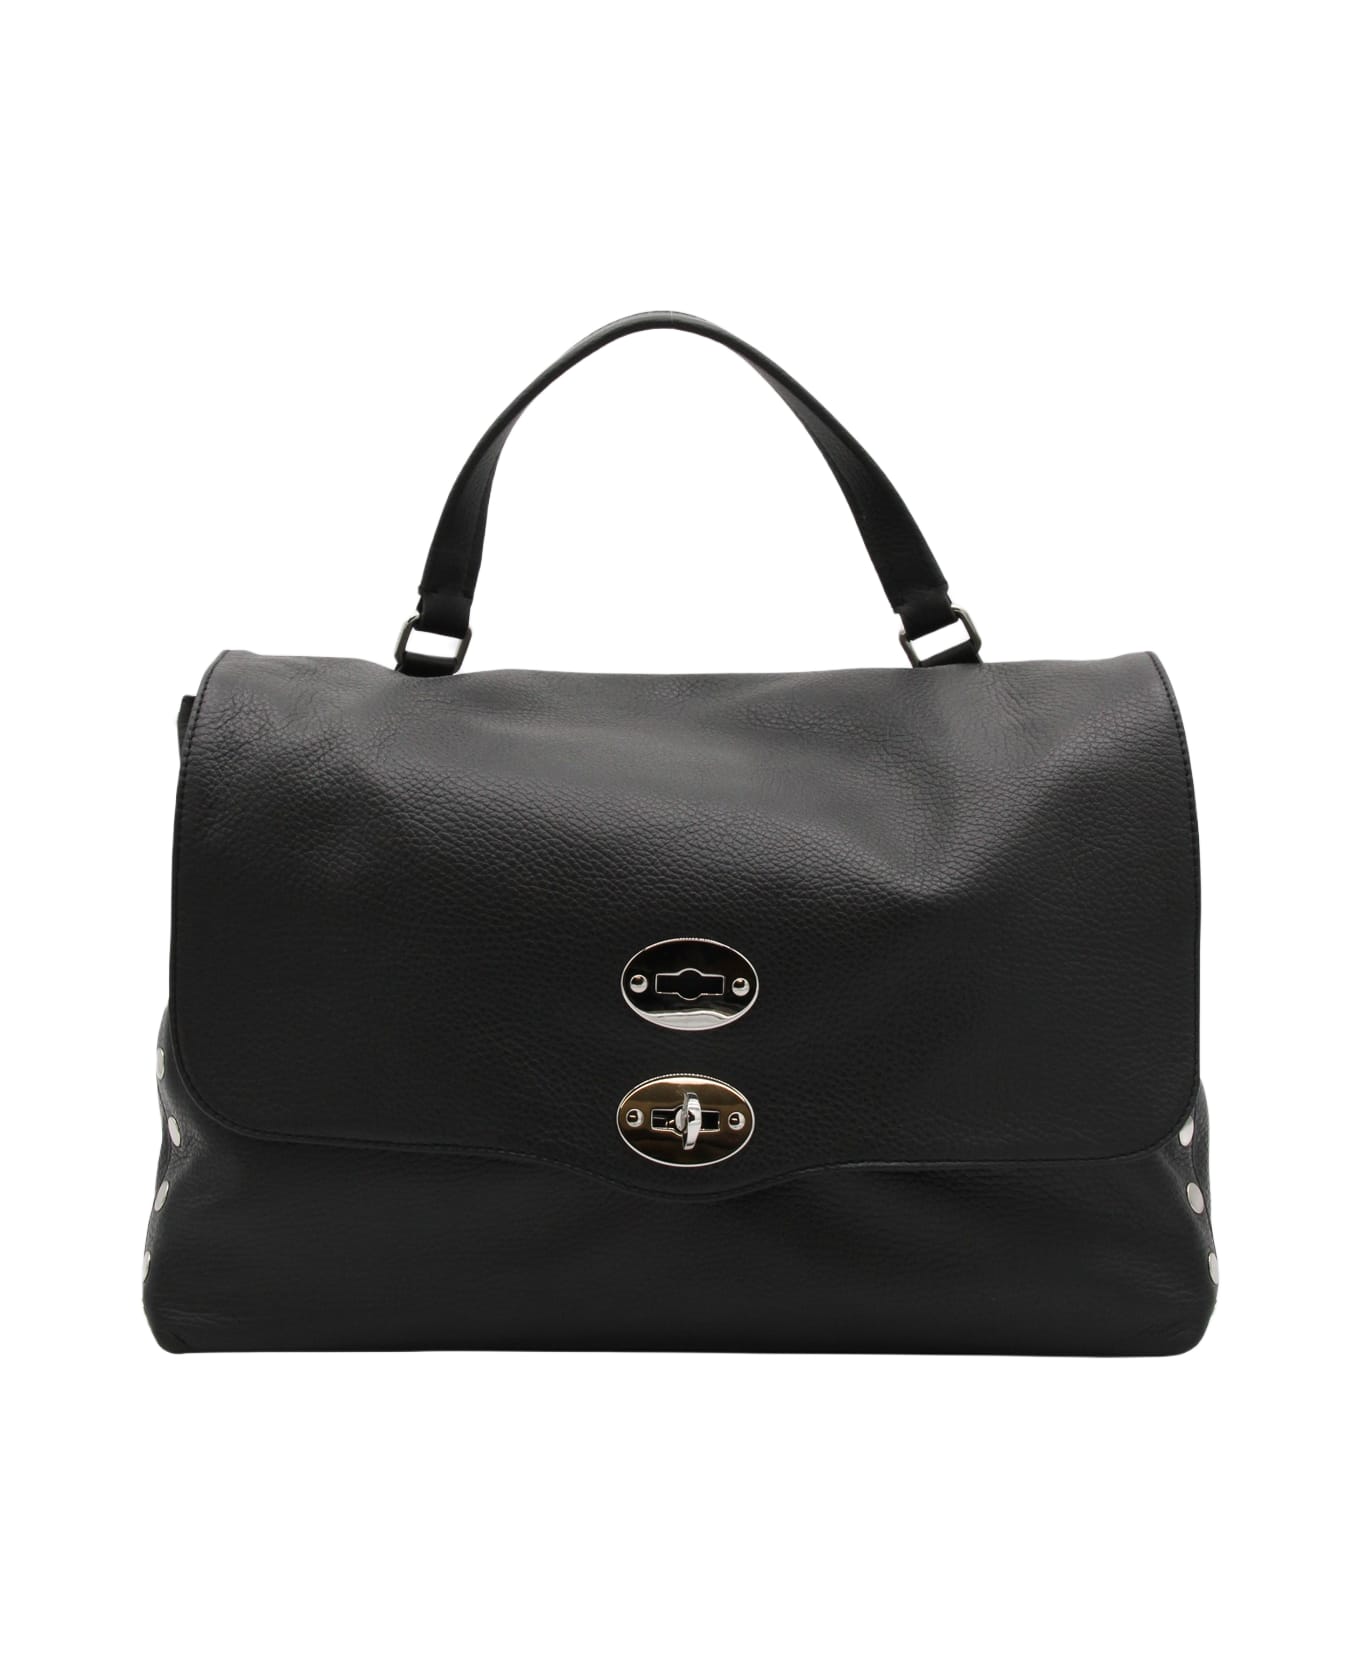 Zanellato Black Leather Postina Daily Medium Top Handle Bag - Black